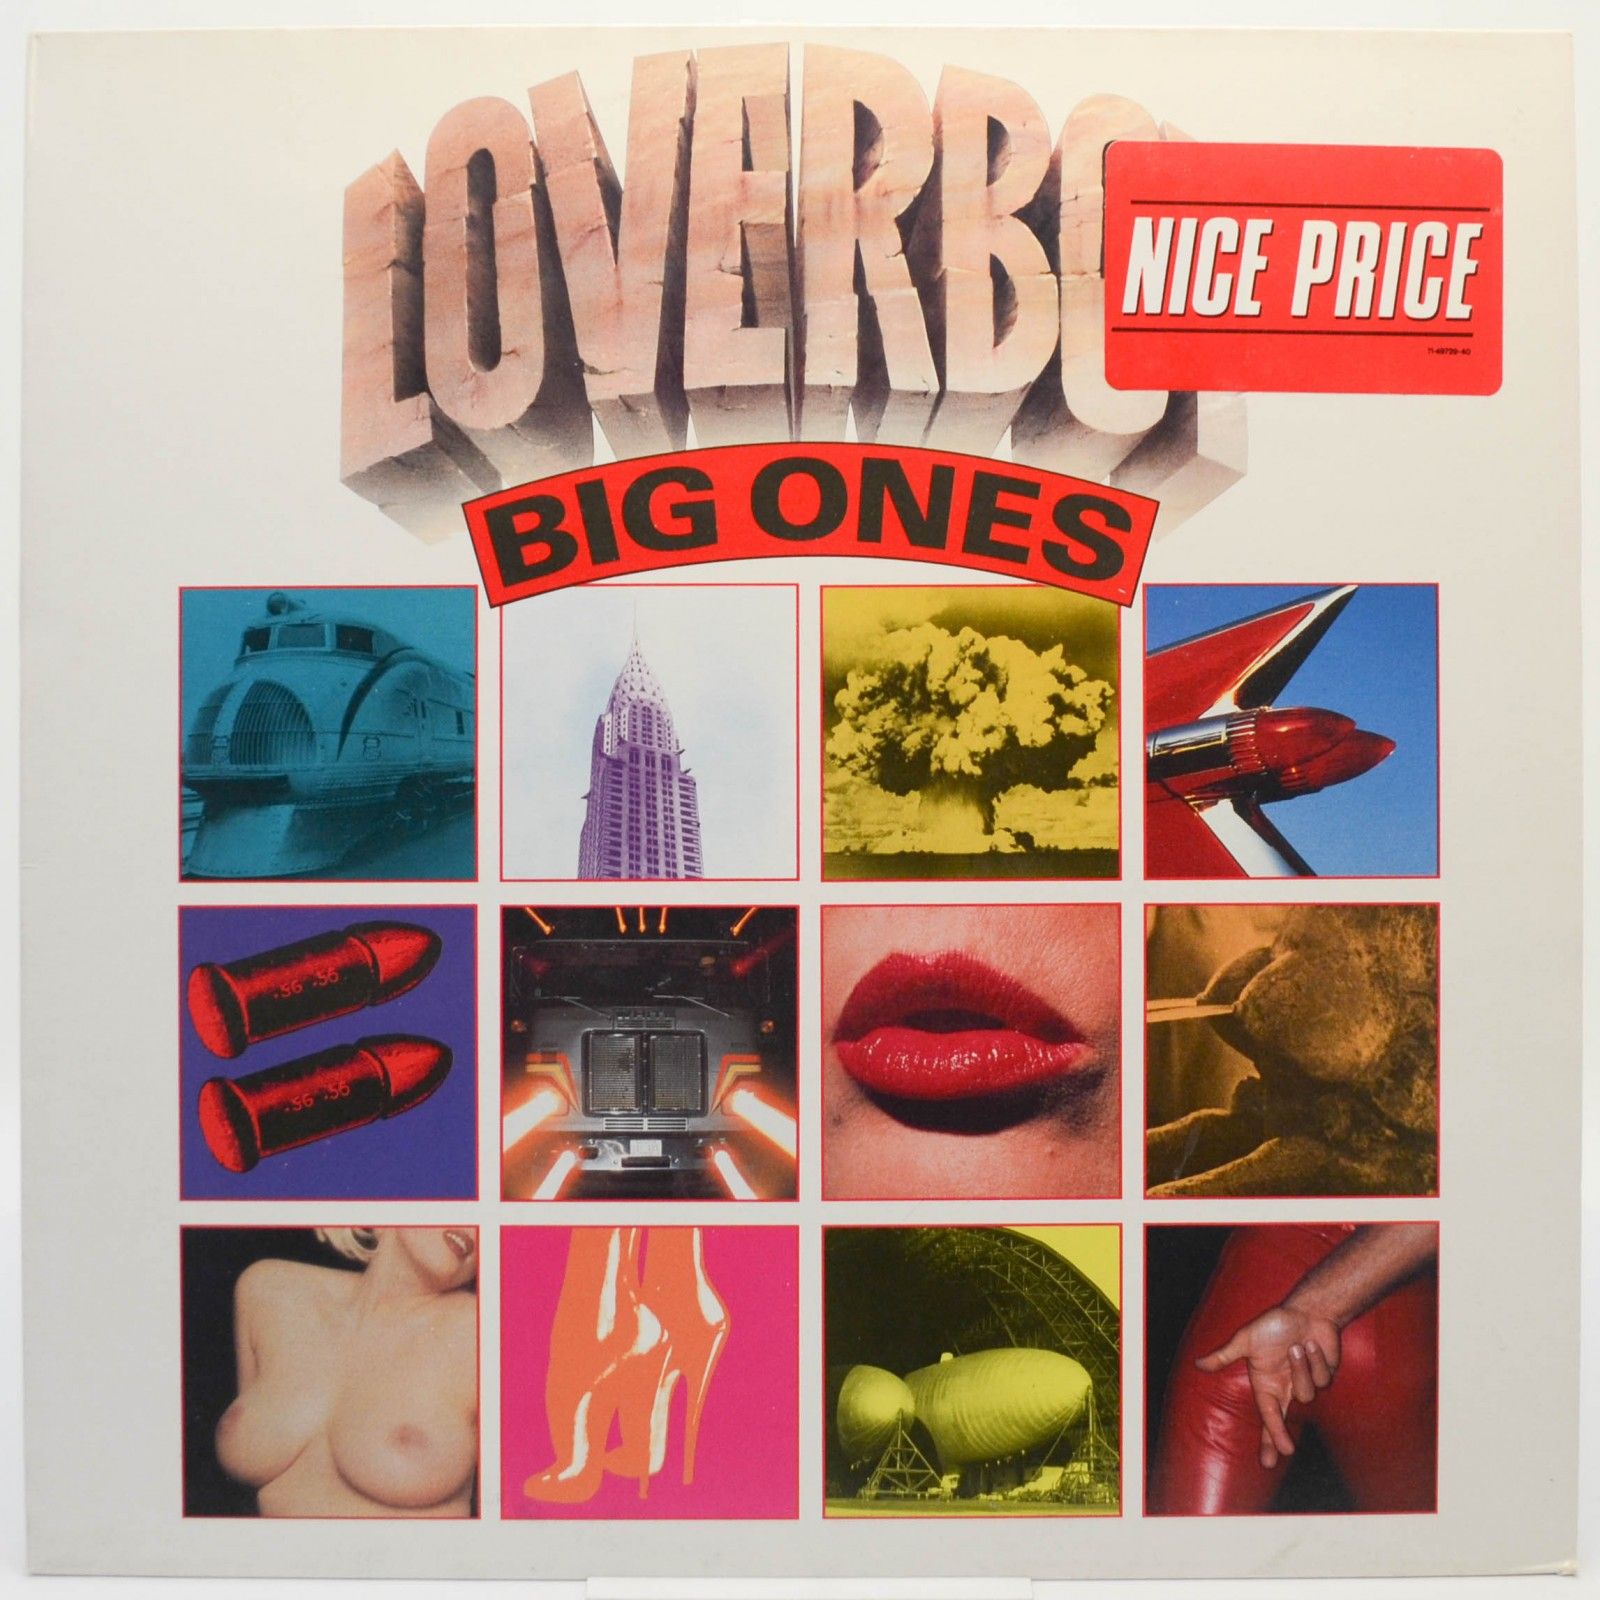 Loverboy — Big Ones, 1989